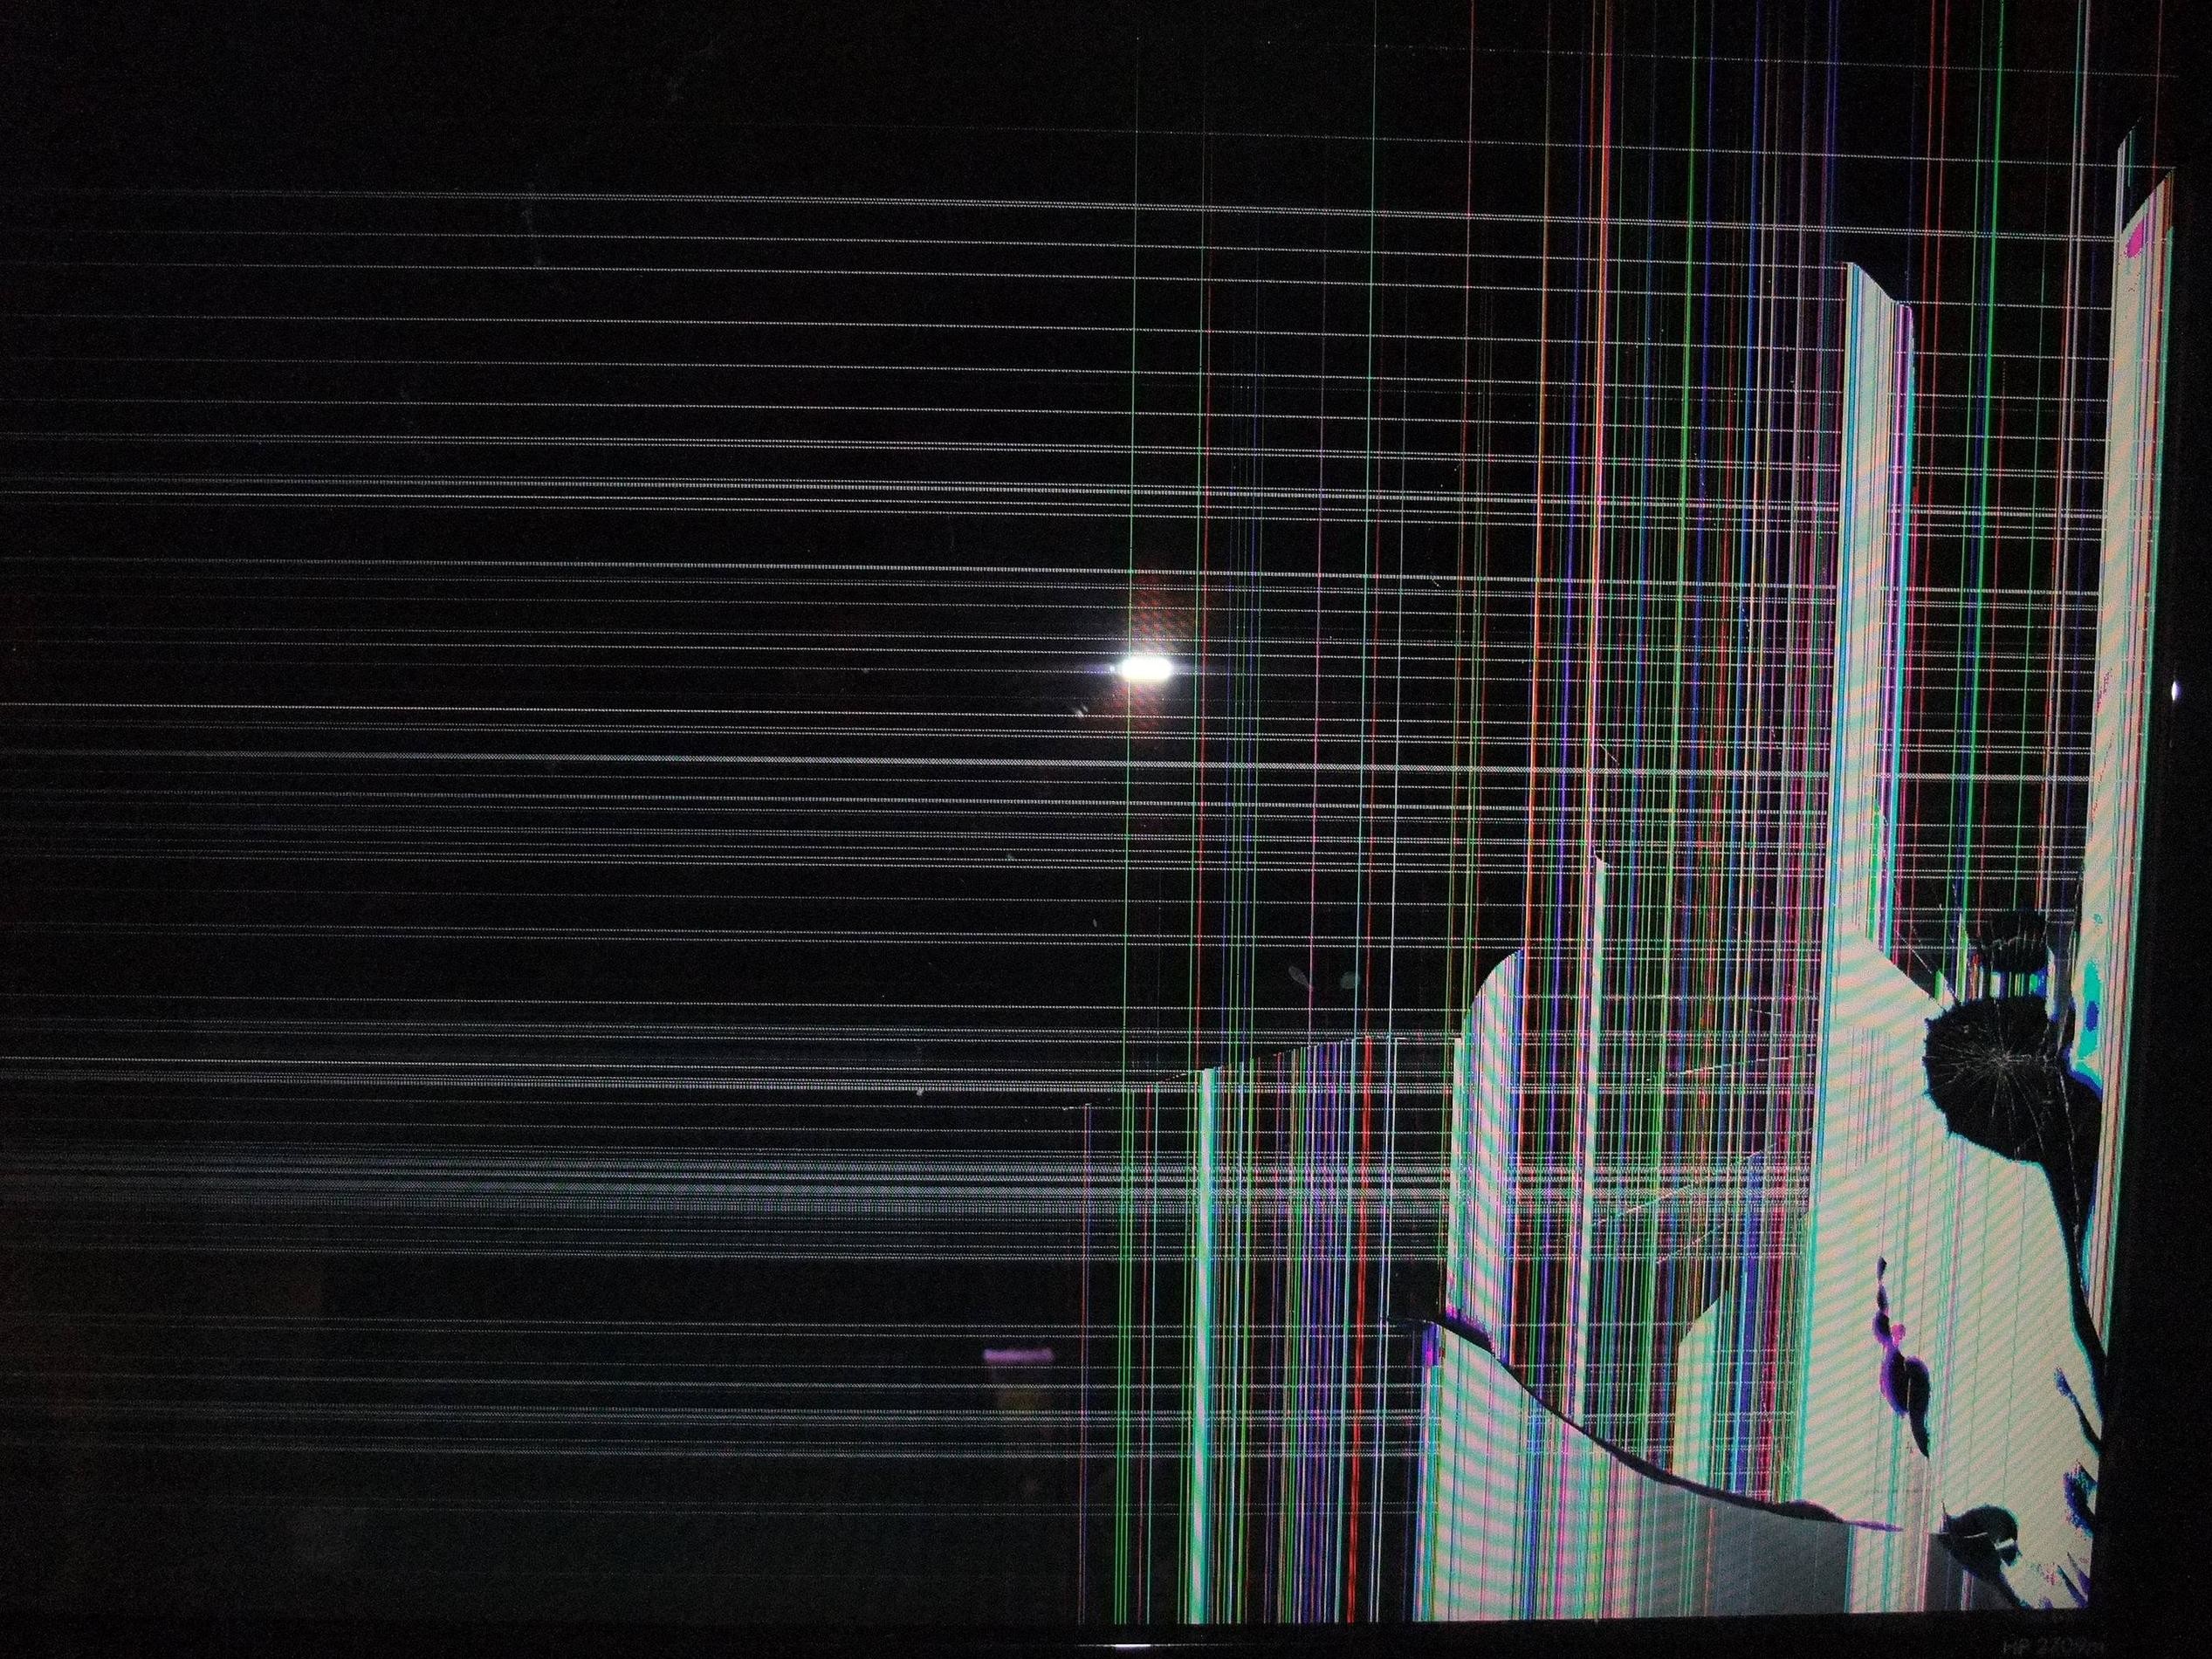 2534x1901 Cracked-LCD-Screen-Wallpaper